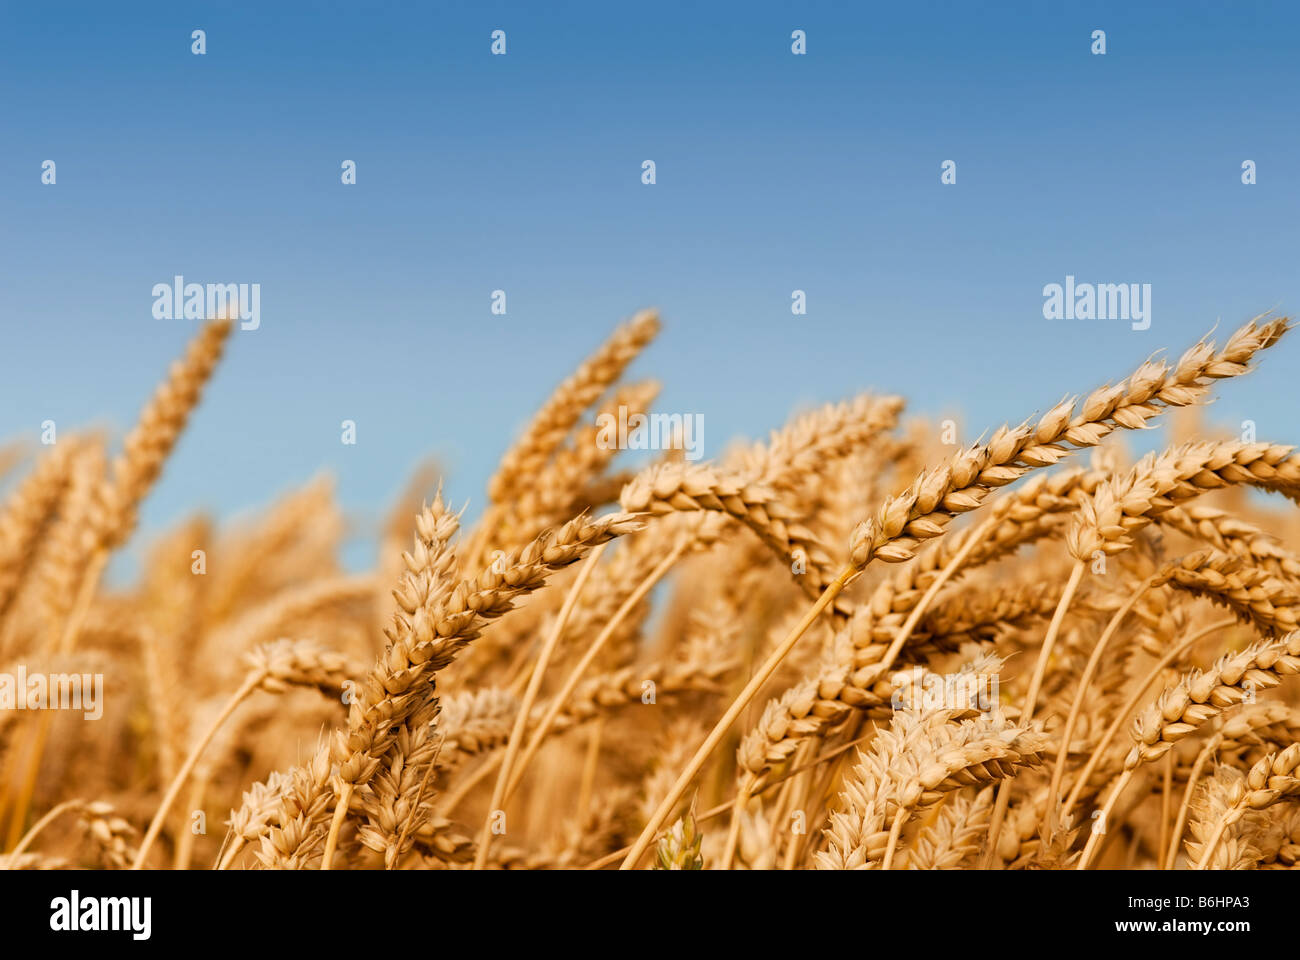 Golden wheat field under a blue sky Stock Photo